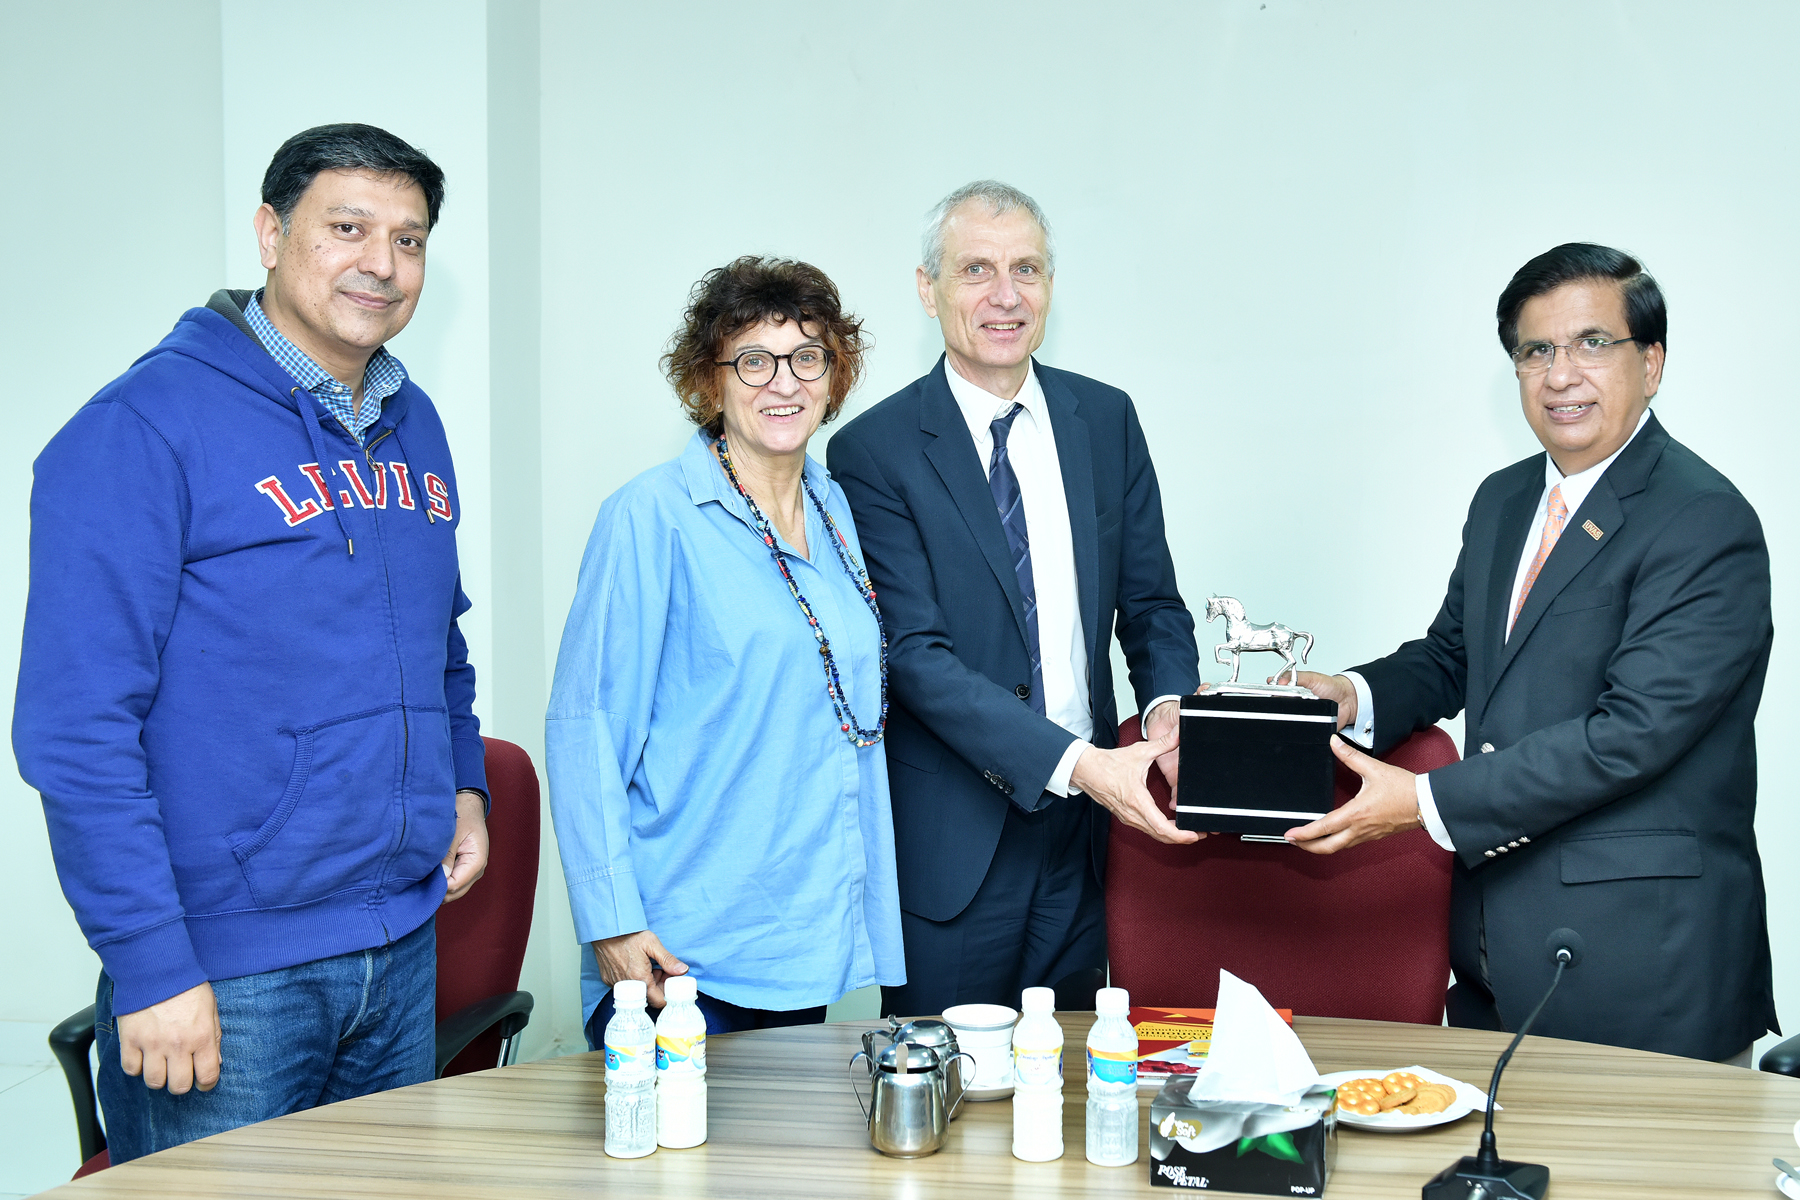 Thomas Kolly, Ambassador of Switzerland visited UVAS